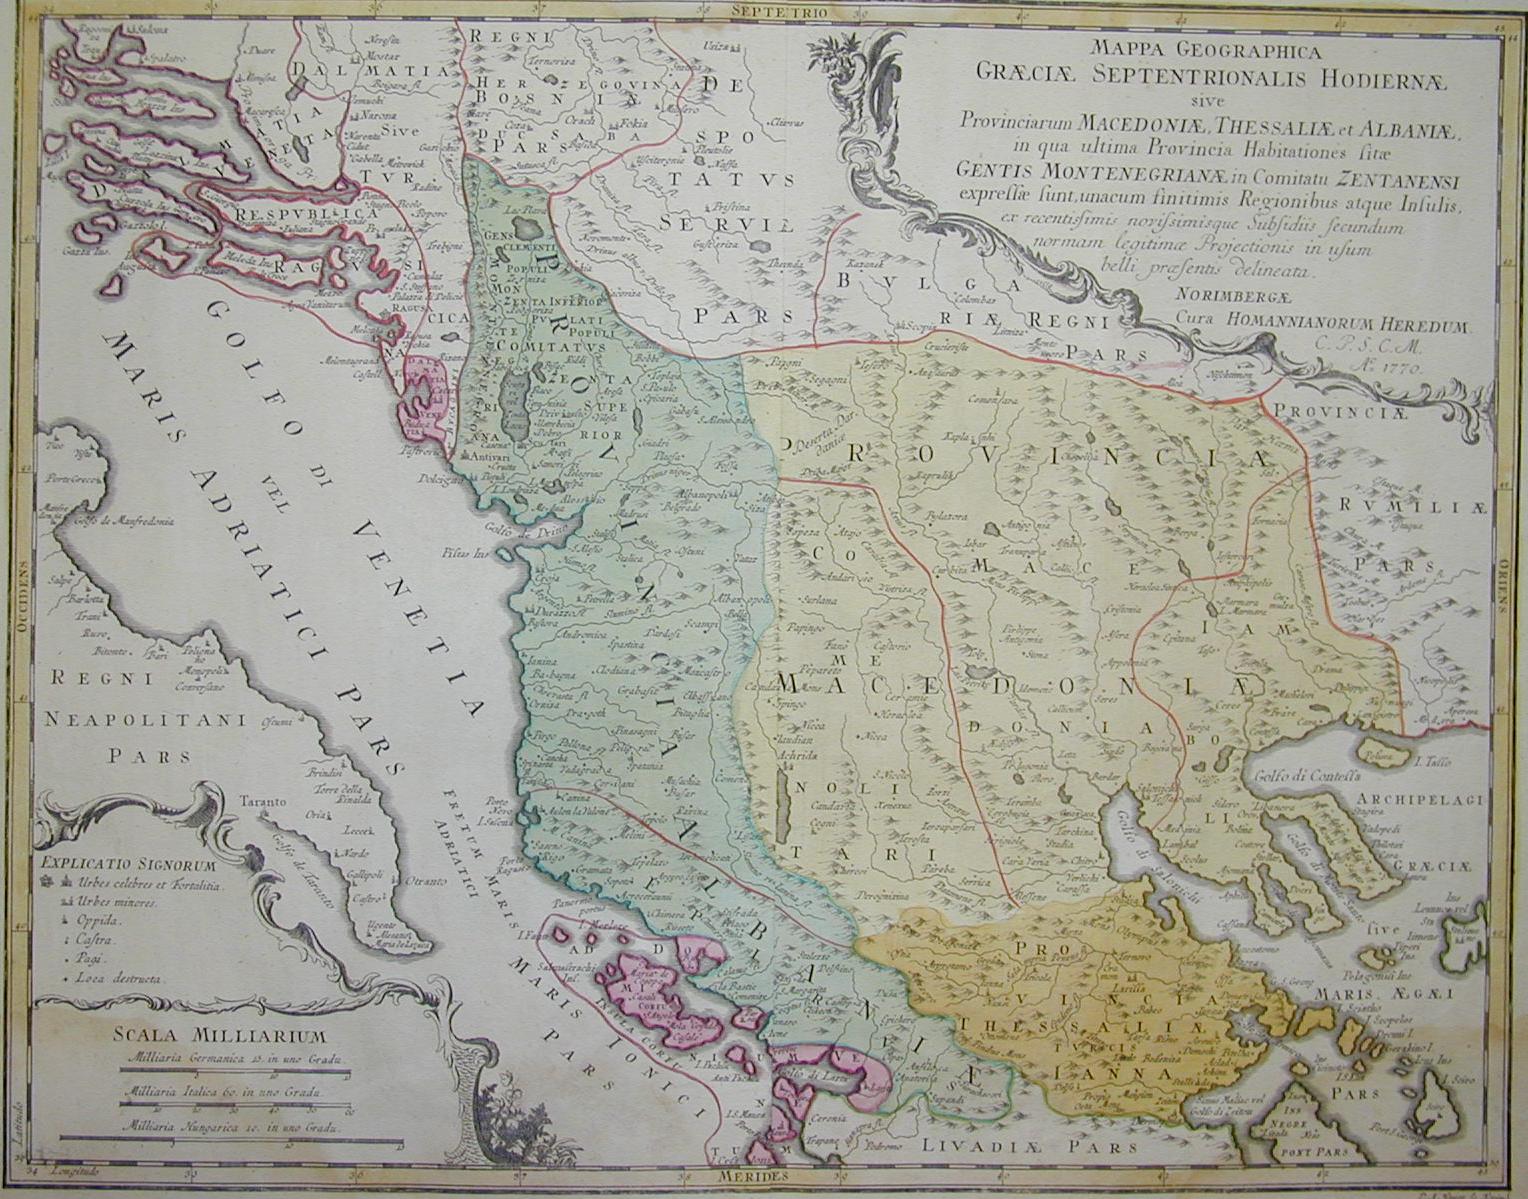 Grecia sett., Macedonia, Montenegro, Albania 1770